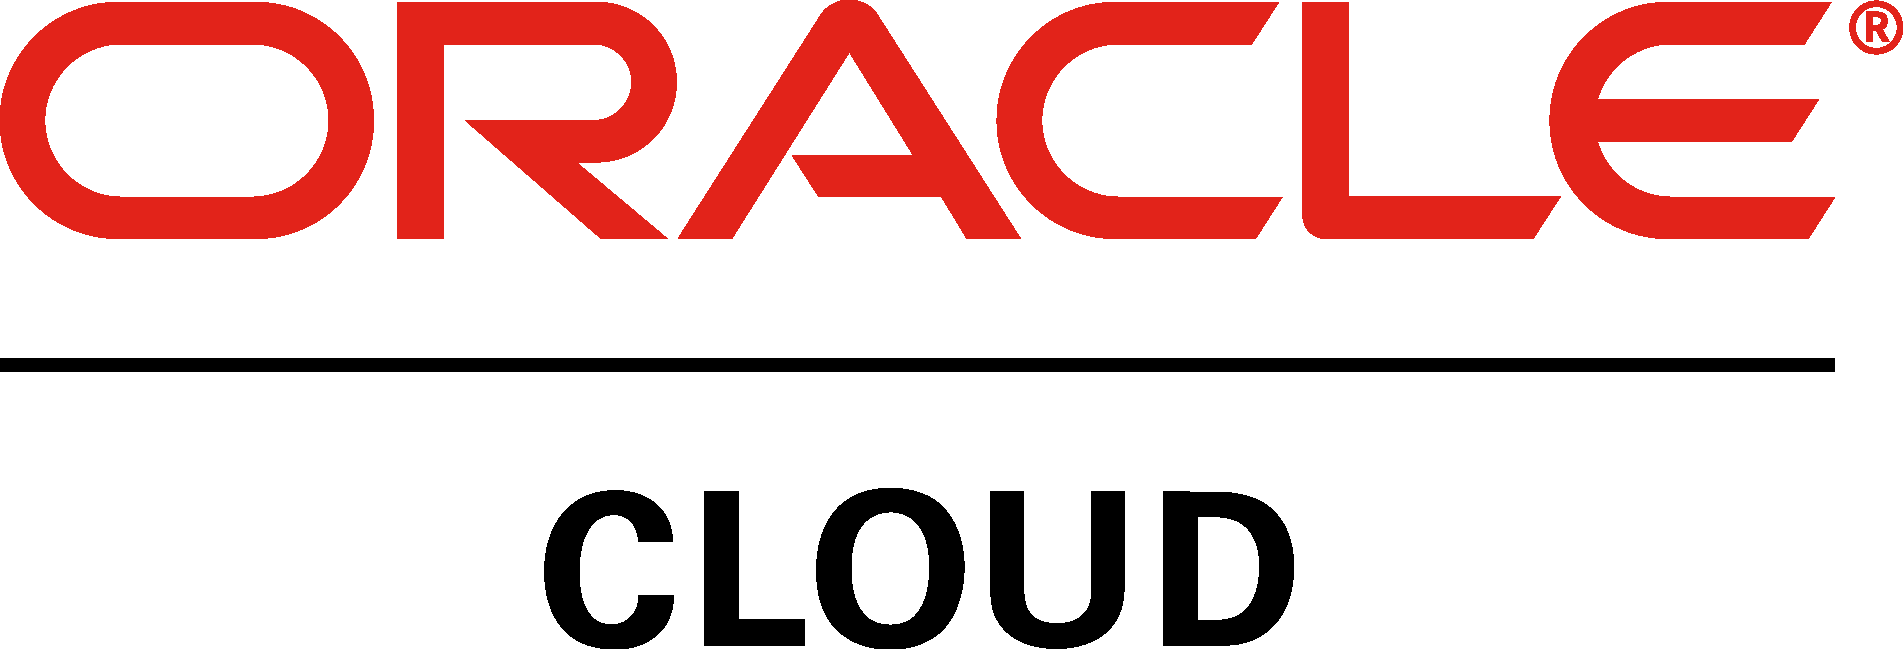 Oracle Cloud Logo - Oracle Cloud Logo Vector Free Download